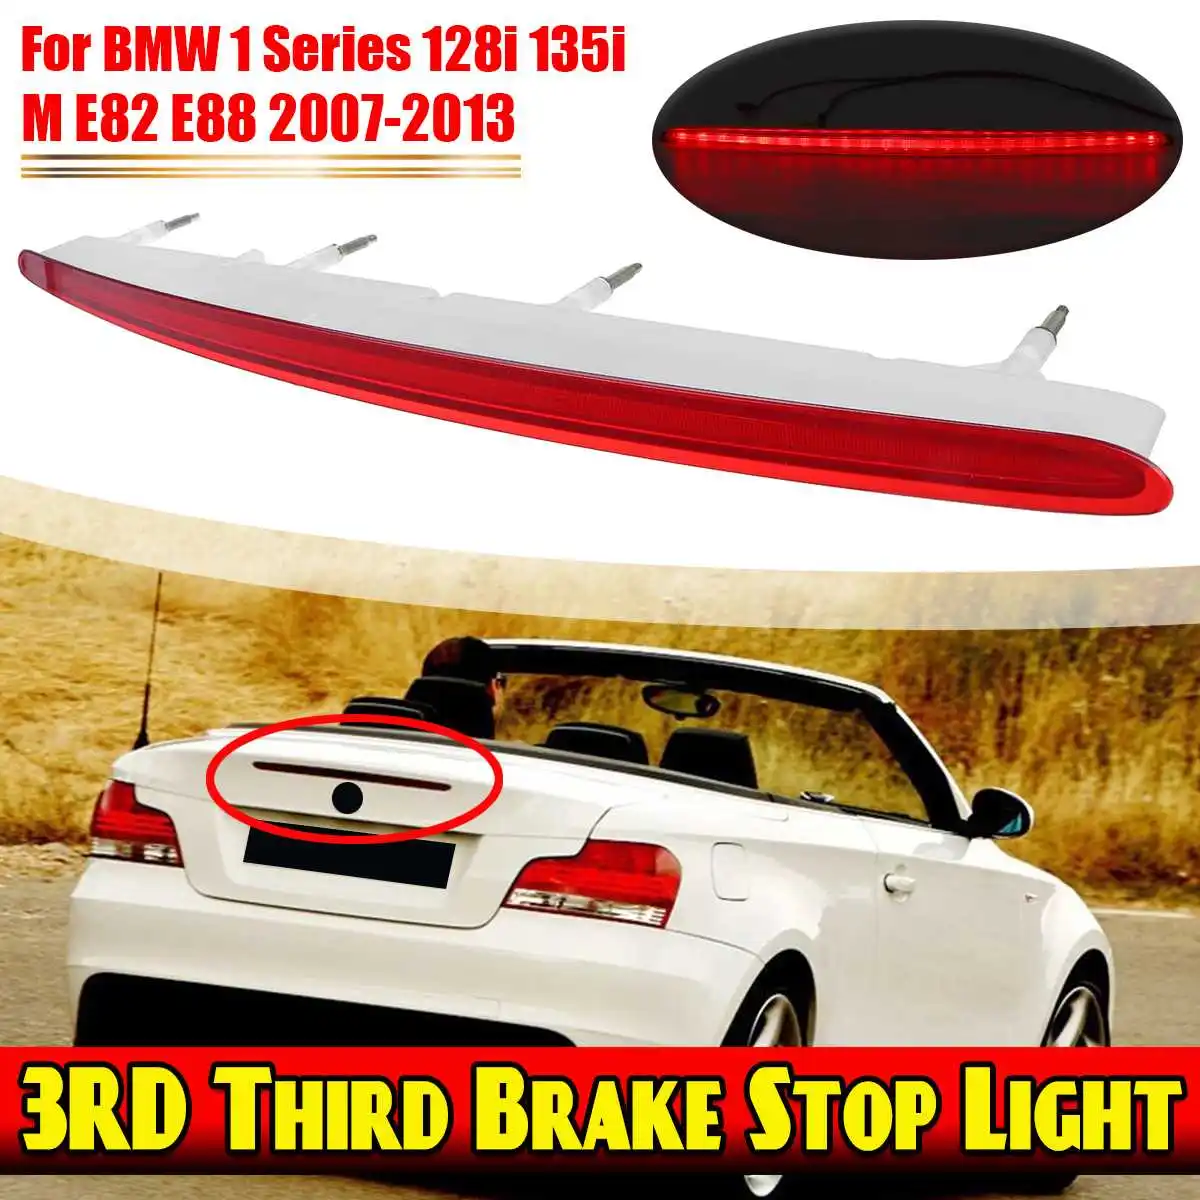 

New LED Car Rear Third Brake Light 3RD Third Brake Stop Lamp Red For BMW E82 E88 1 Series 128i 135i M 2007-2013 63257164978